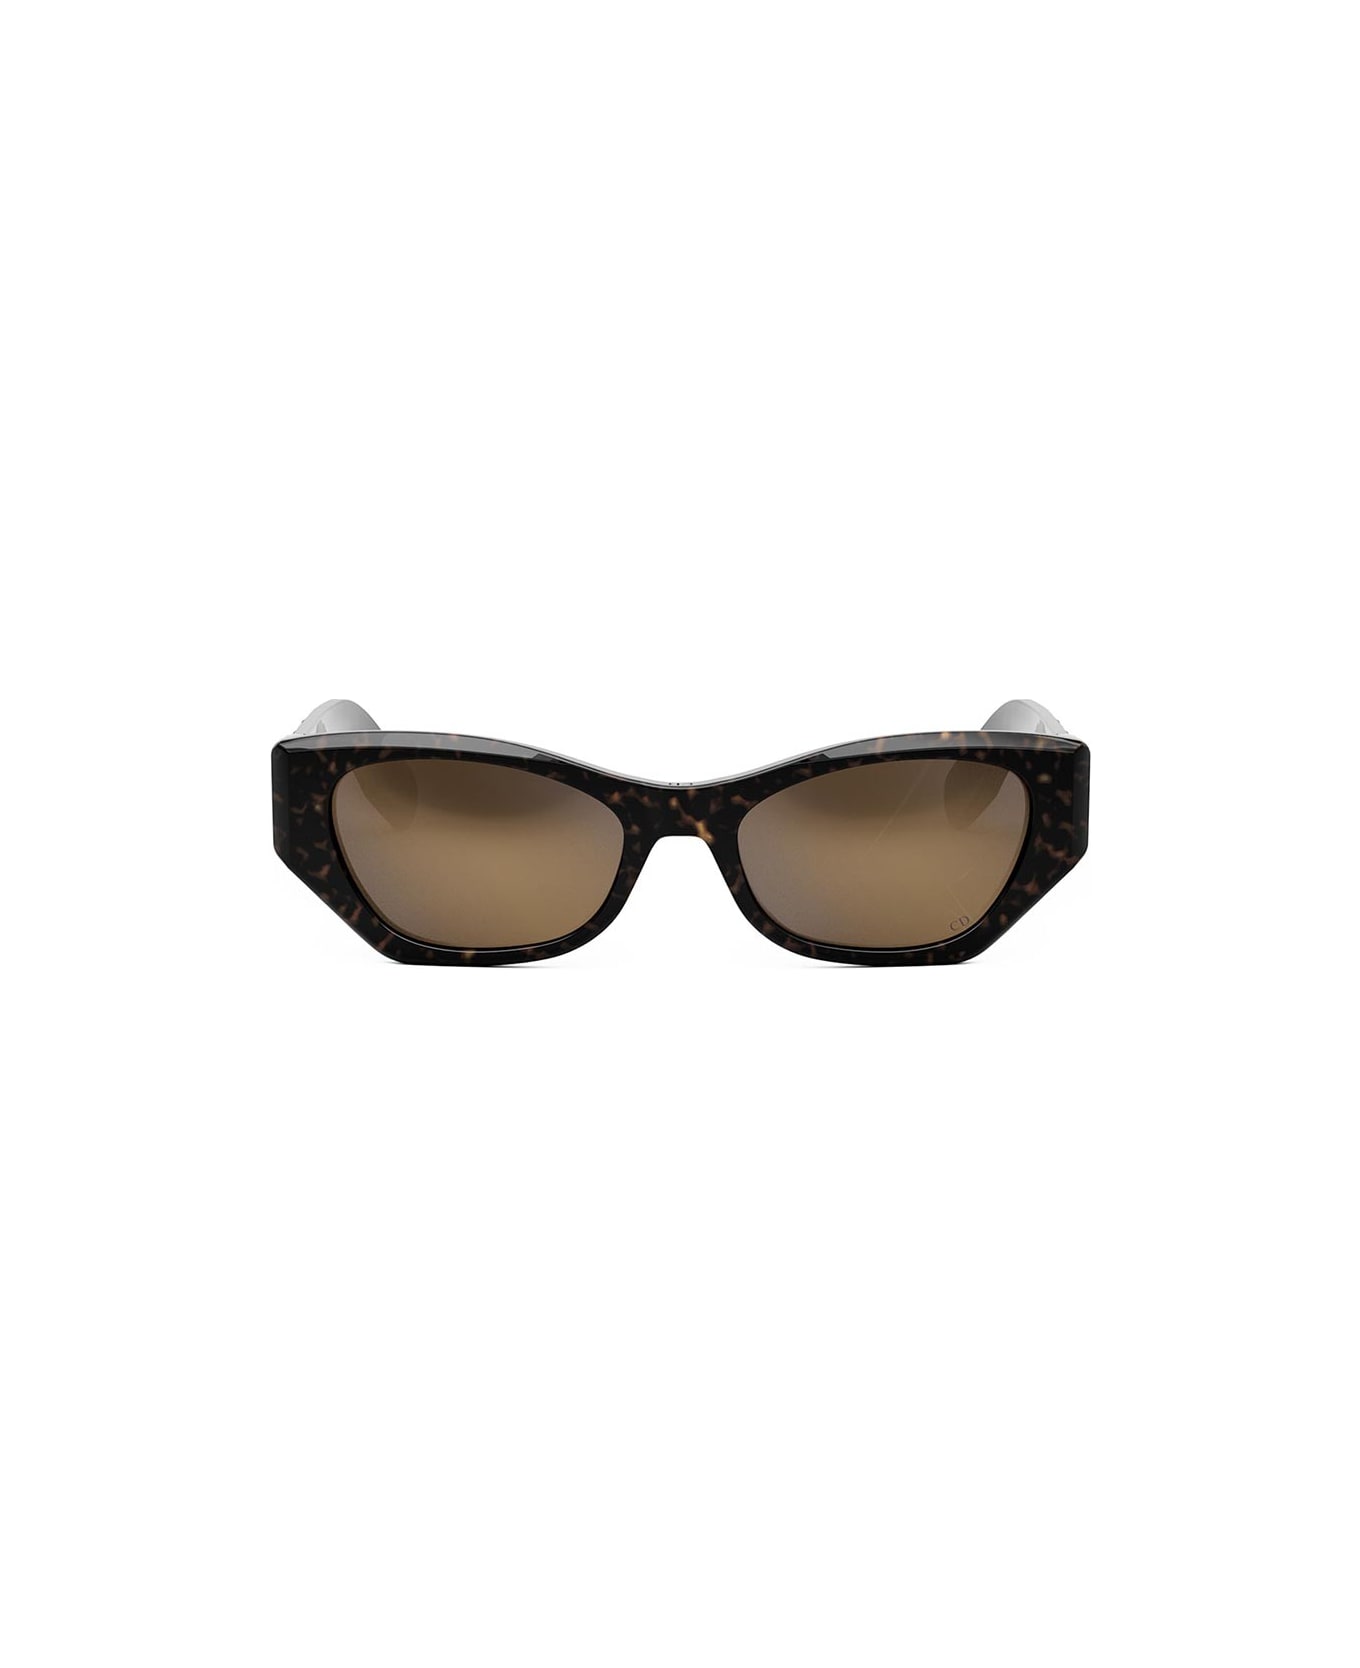 Dior Eyewear Sunglasses - Havana/Marrone